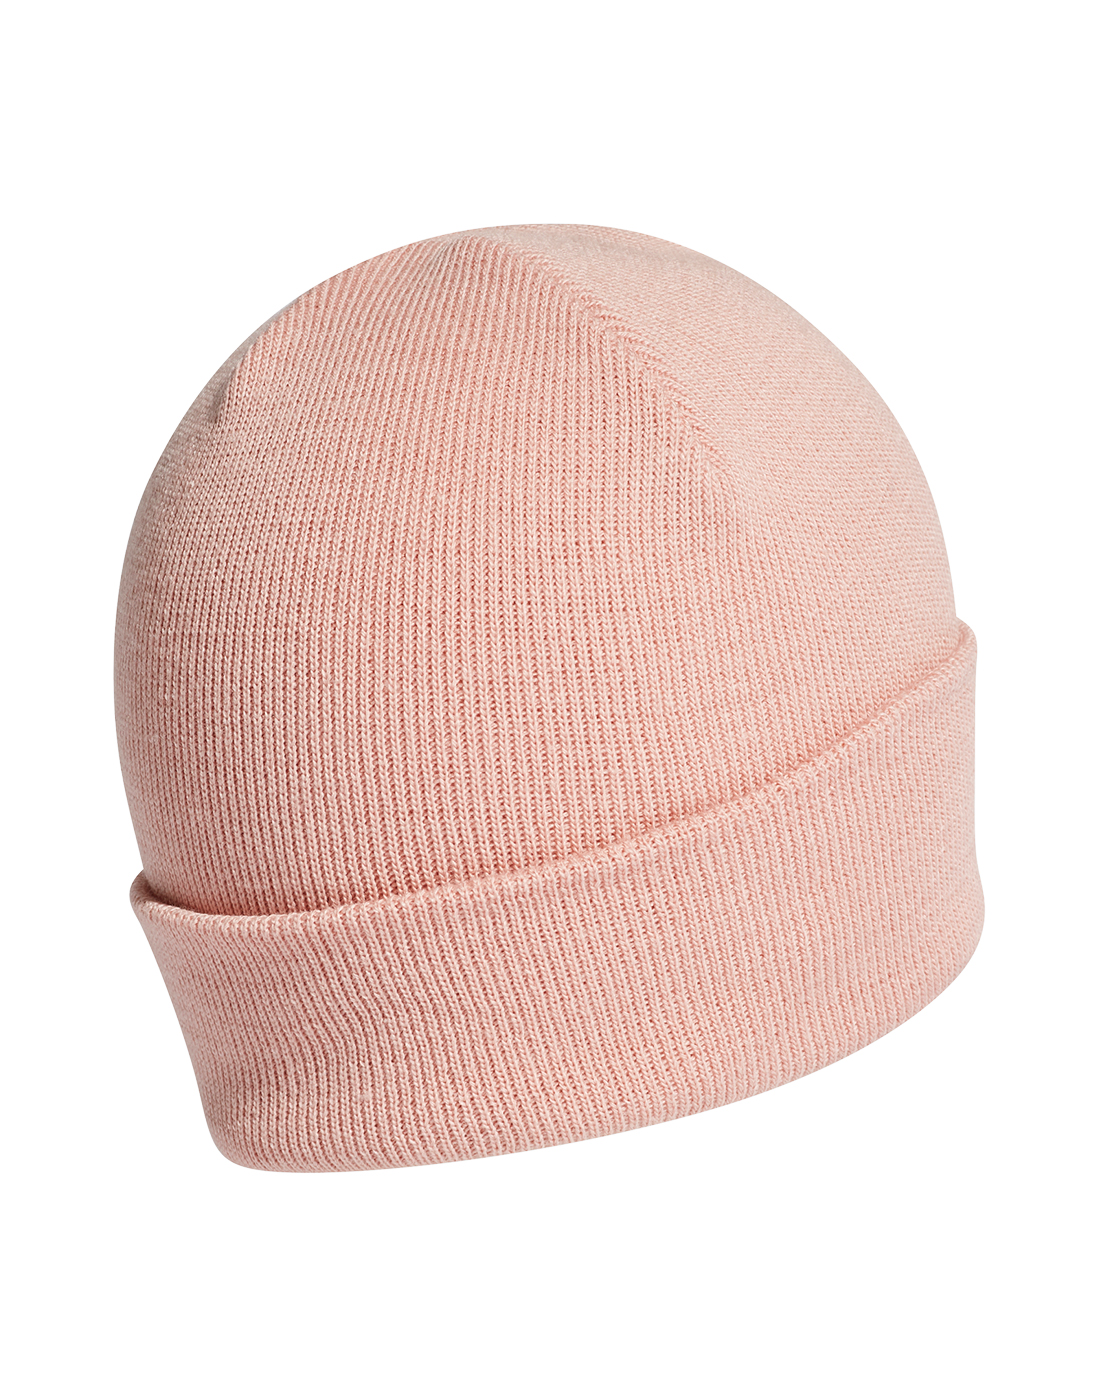 adidas Originals Trefoil Knit Woolly Hat - Pink | Life Style Sports EU